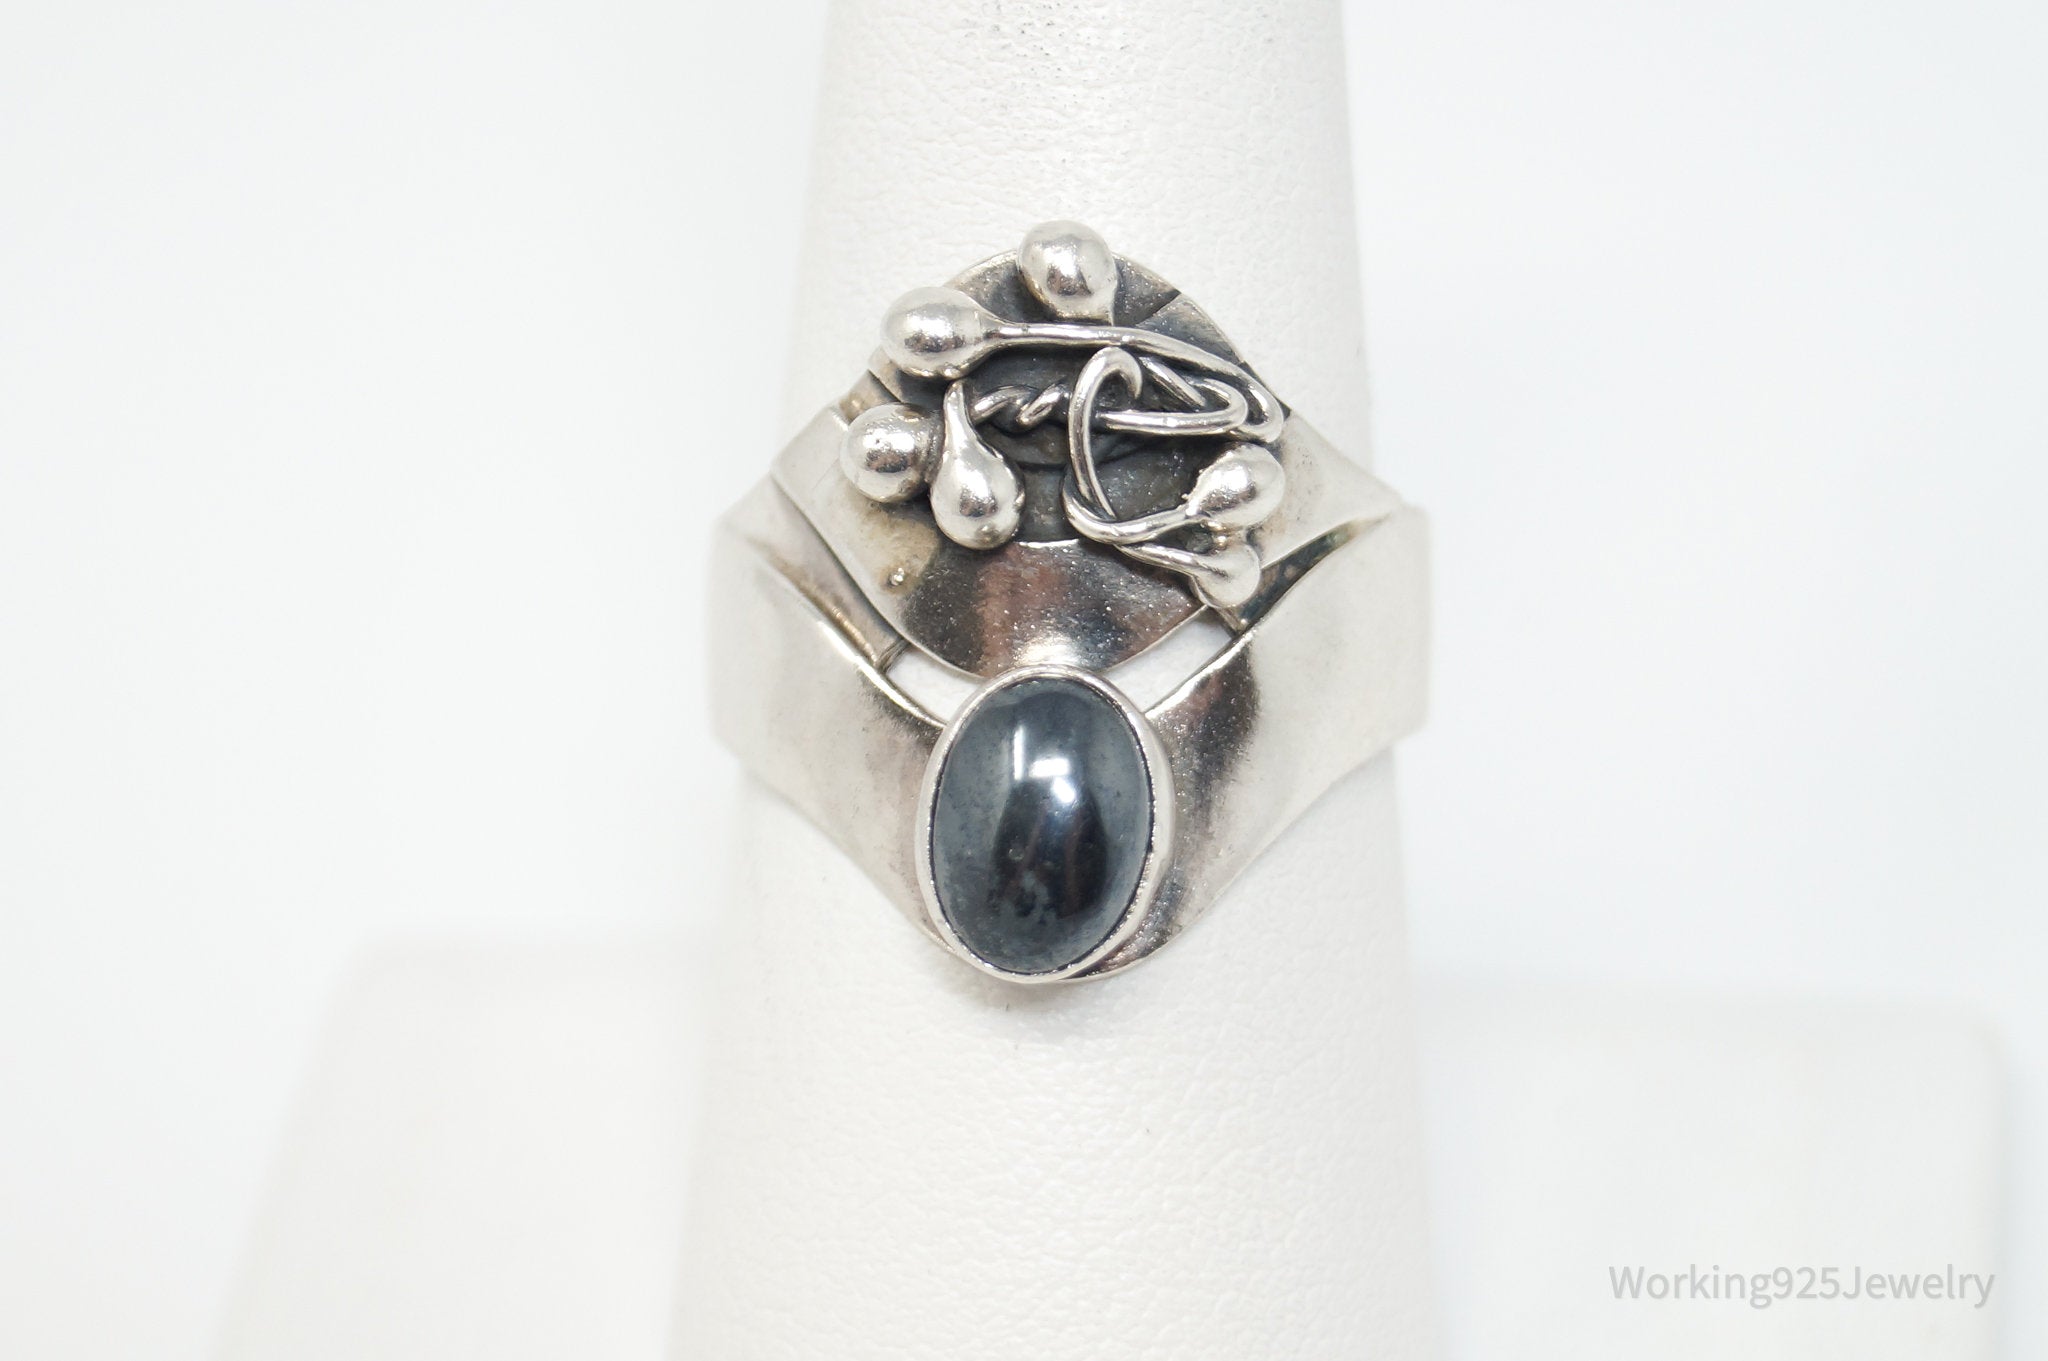 Vintage Modernist YABAR Hematite Sterling Silver Ring - Size 7.75